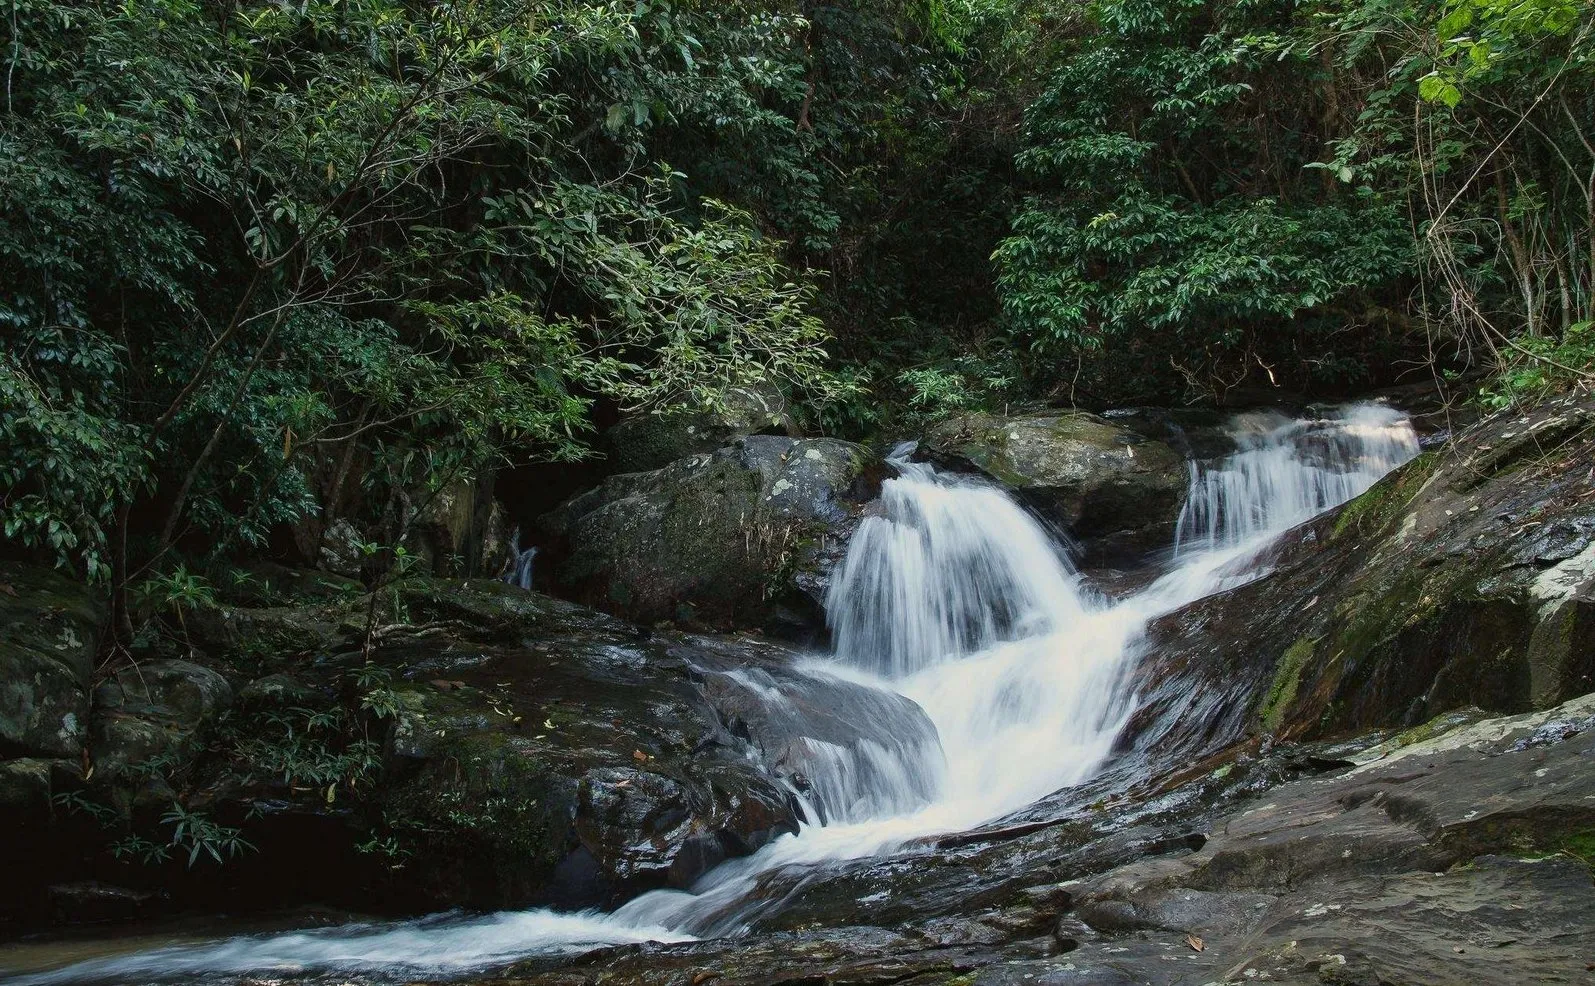 The wild beauty of Ba Do Phot waterfall